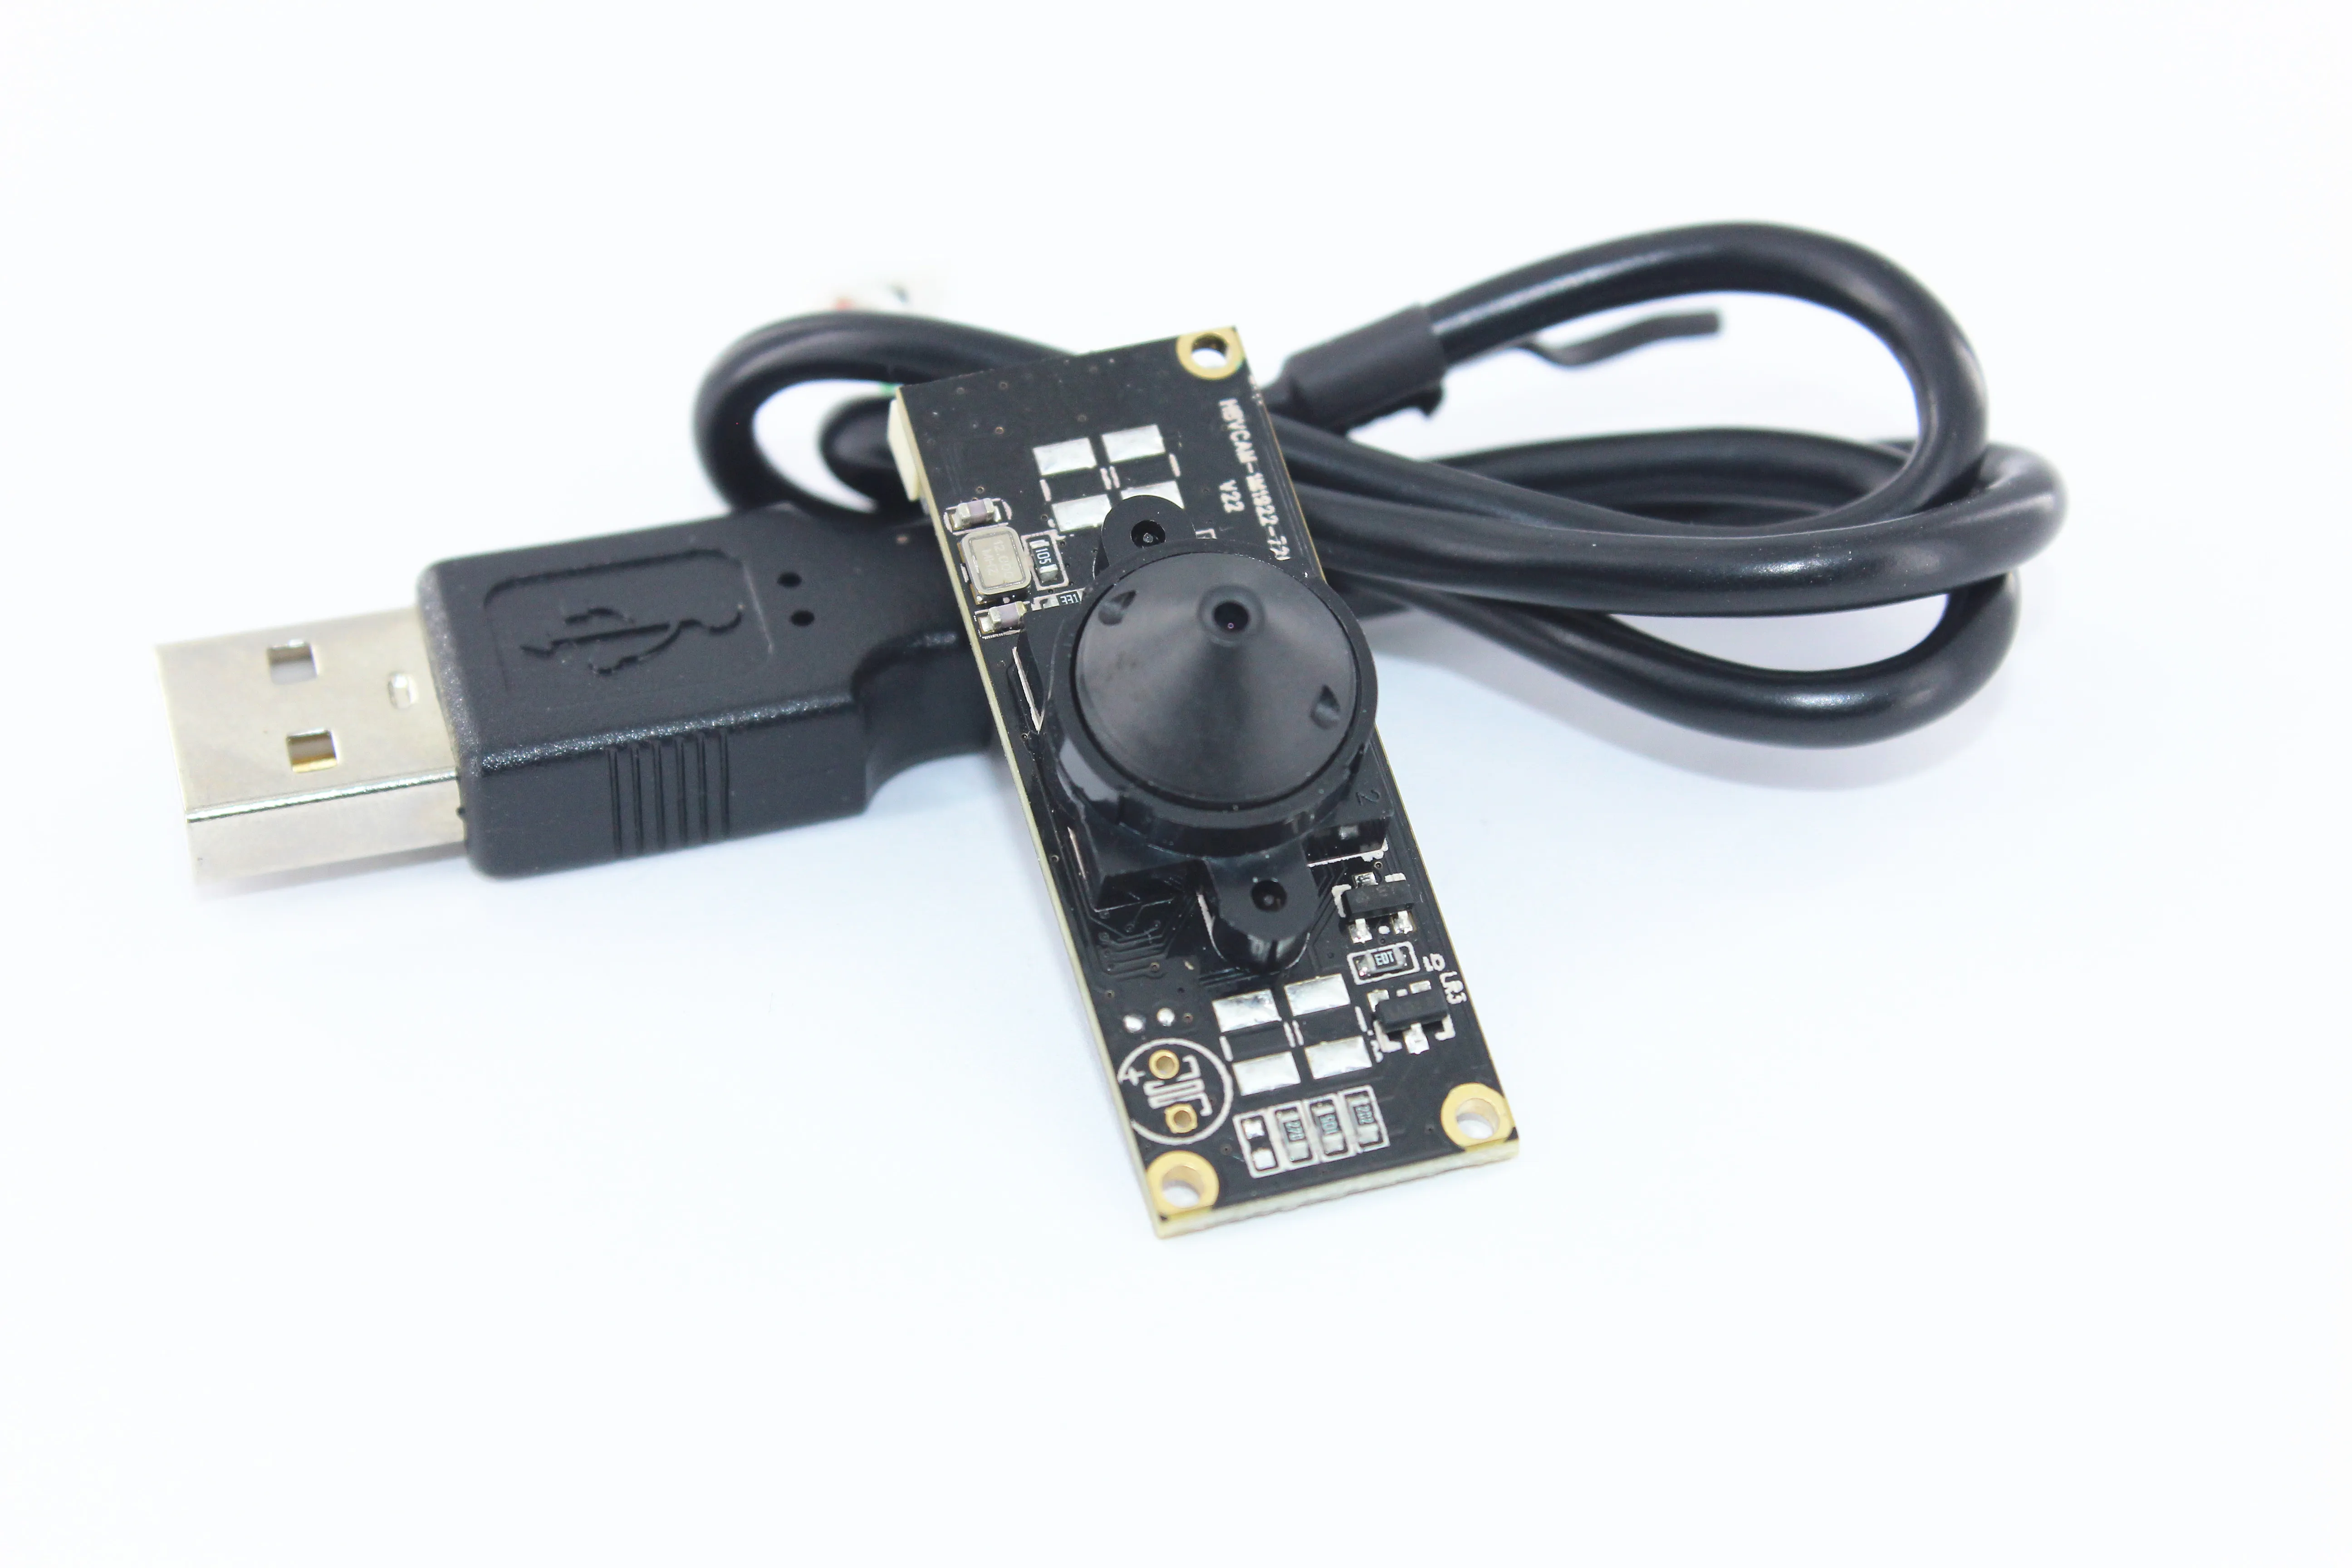 1MP 720p Cmos OV9712 сенсор Мини HD USB объектив камеры модуль со стандартным UVC протокол